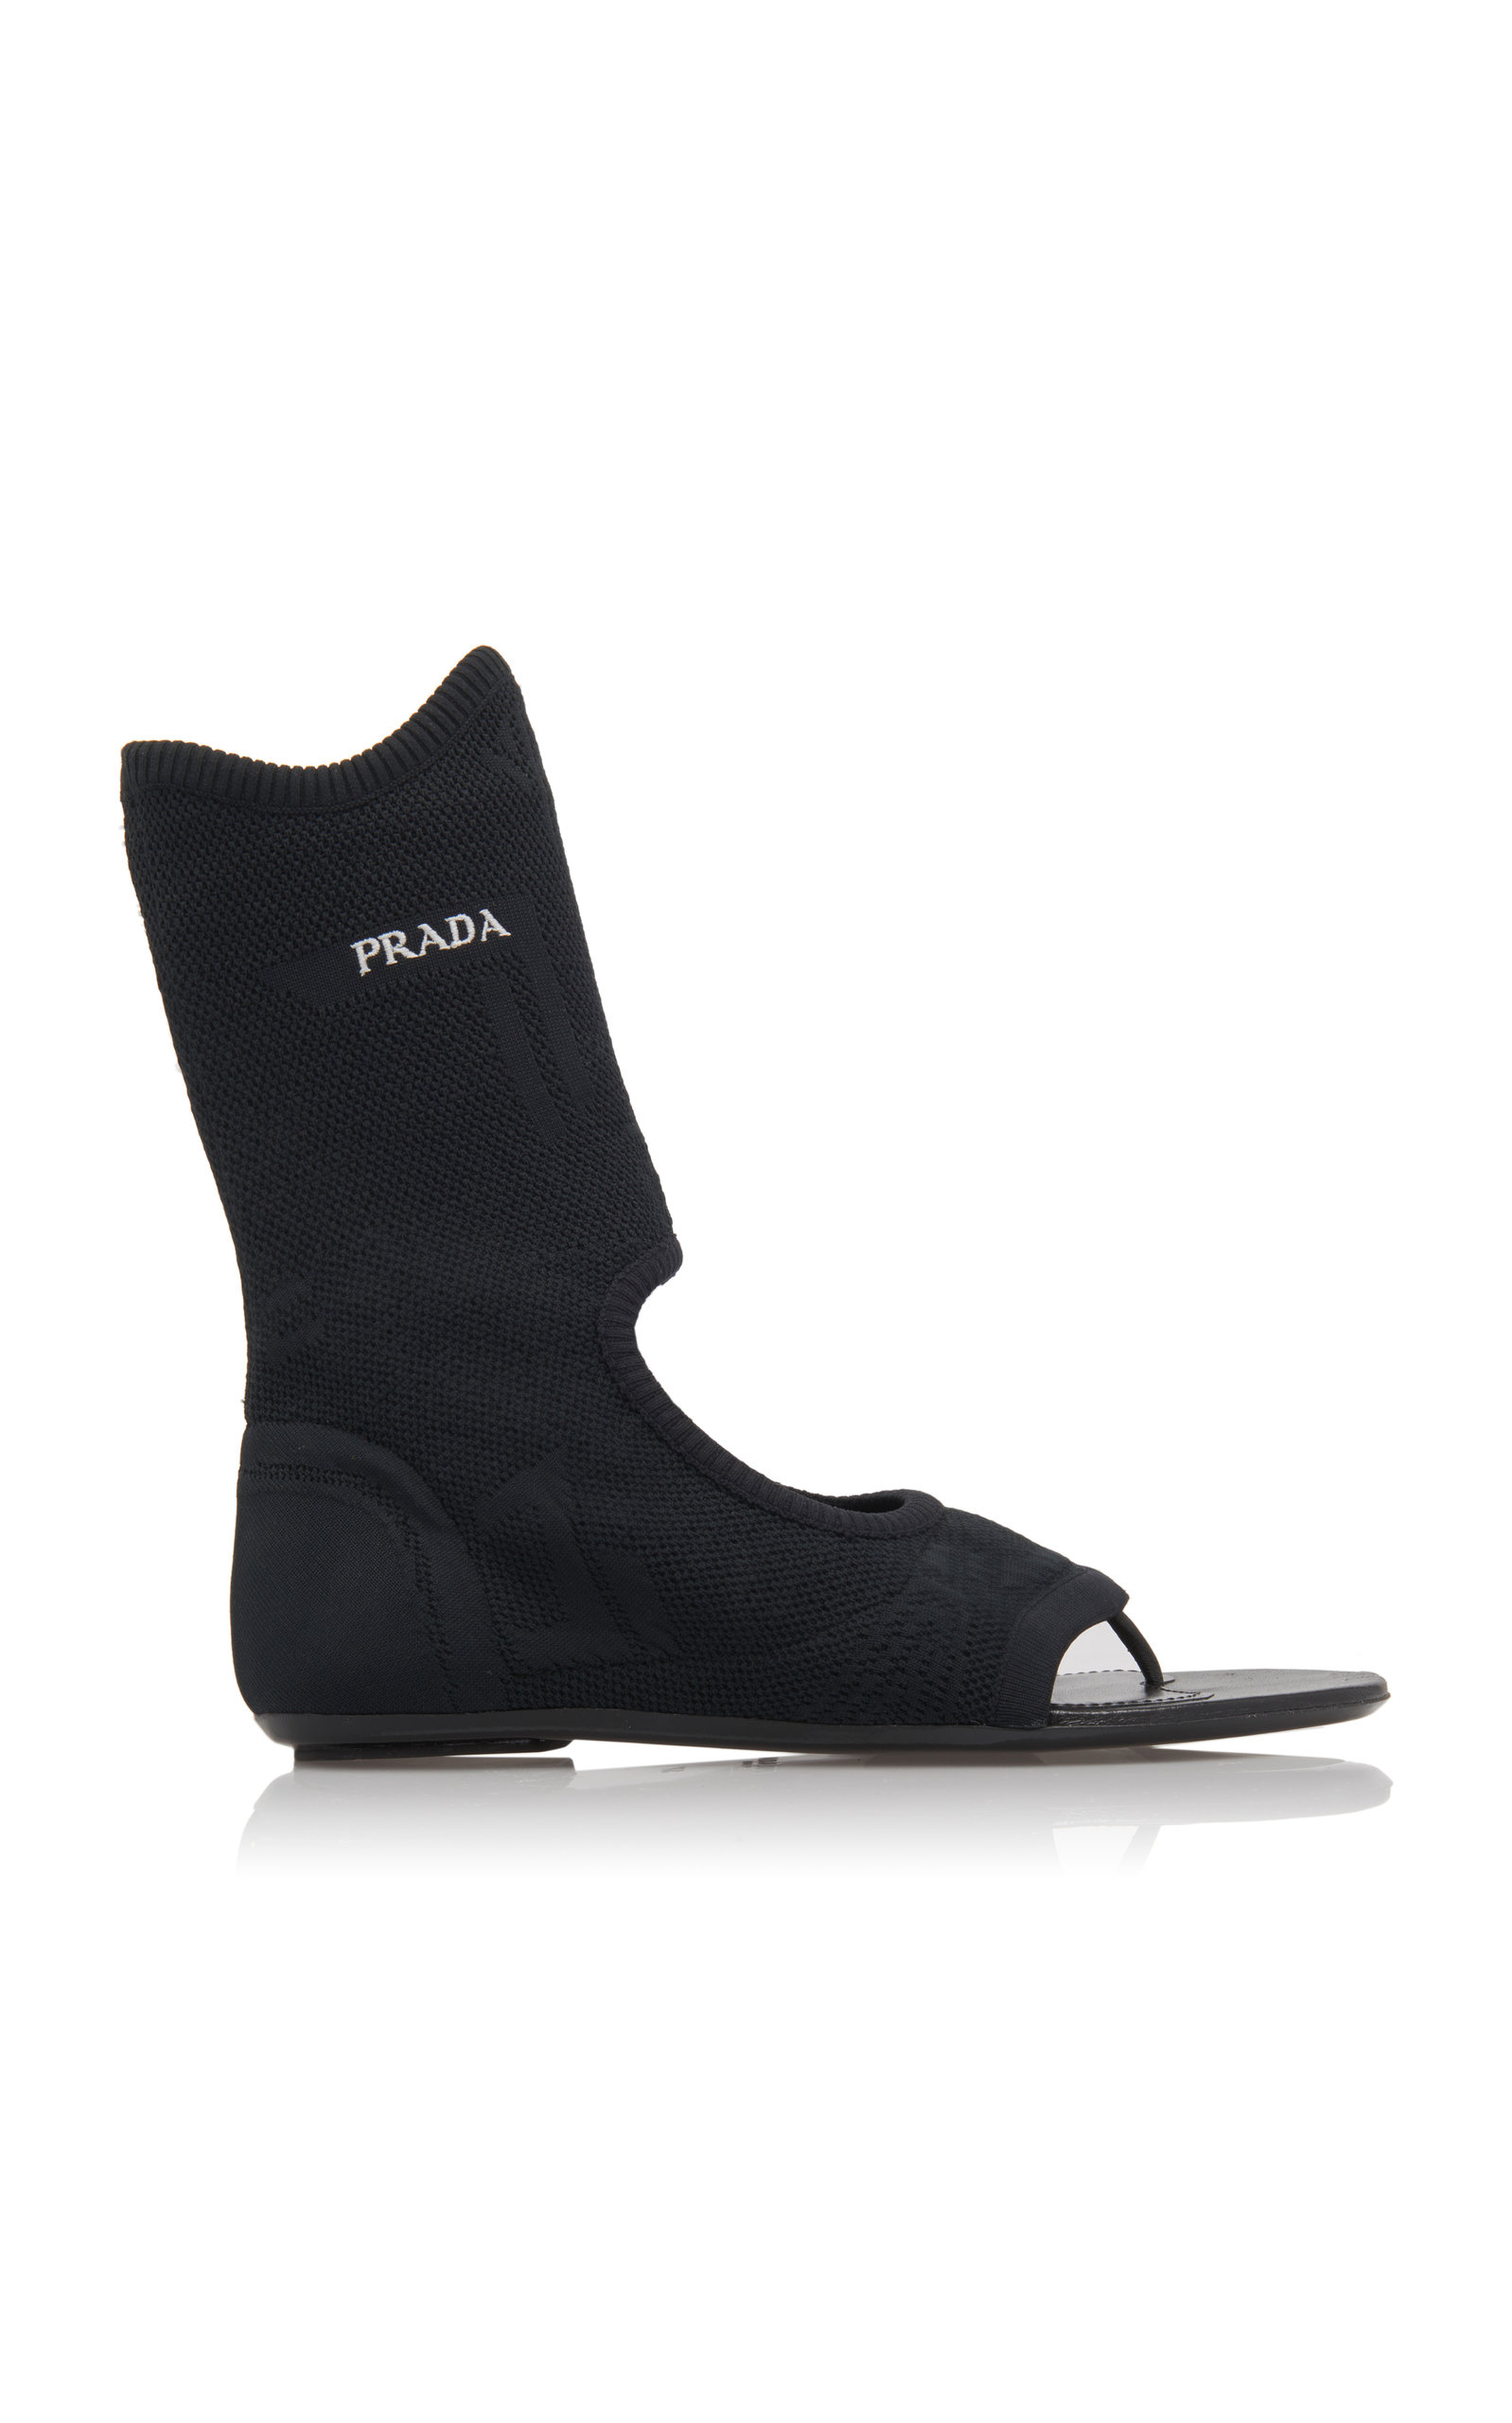 Prada - Women's Knitted Flat Sandals - Black - IT 36 - Moda Operandi